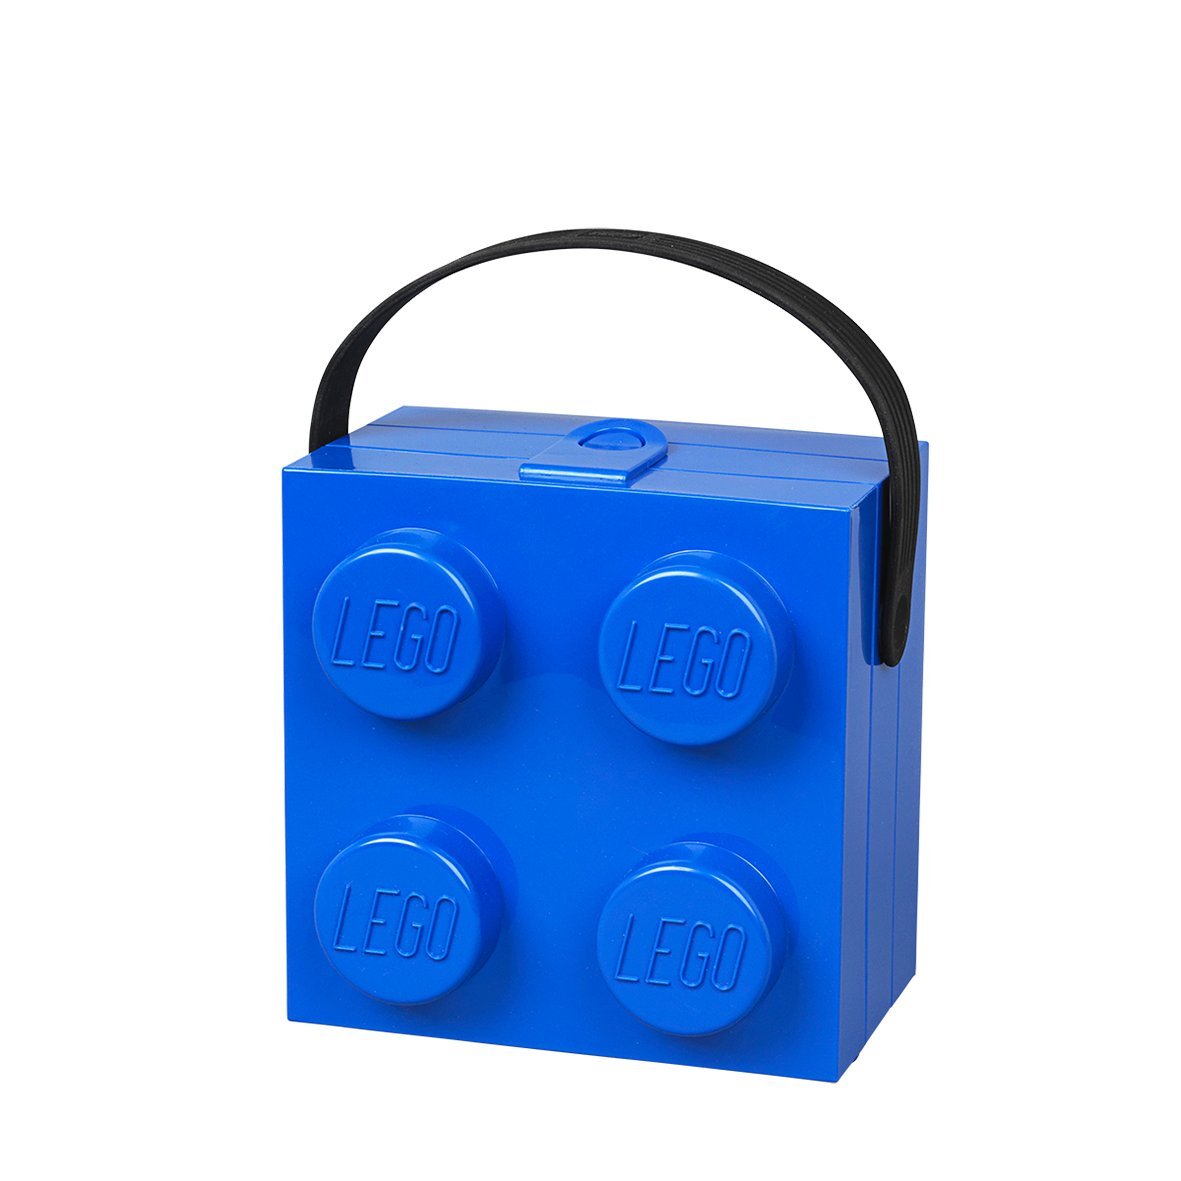 Lunch box LEGO bleu